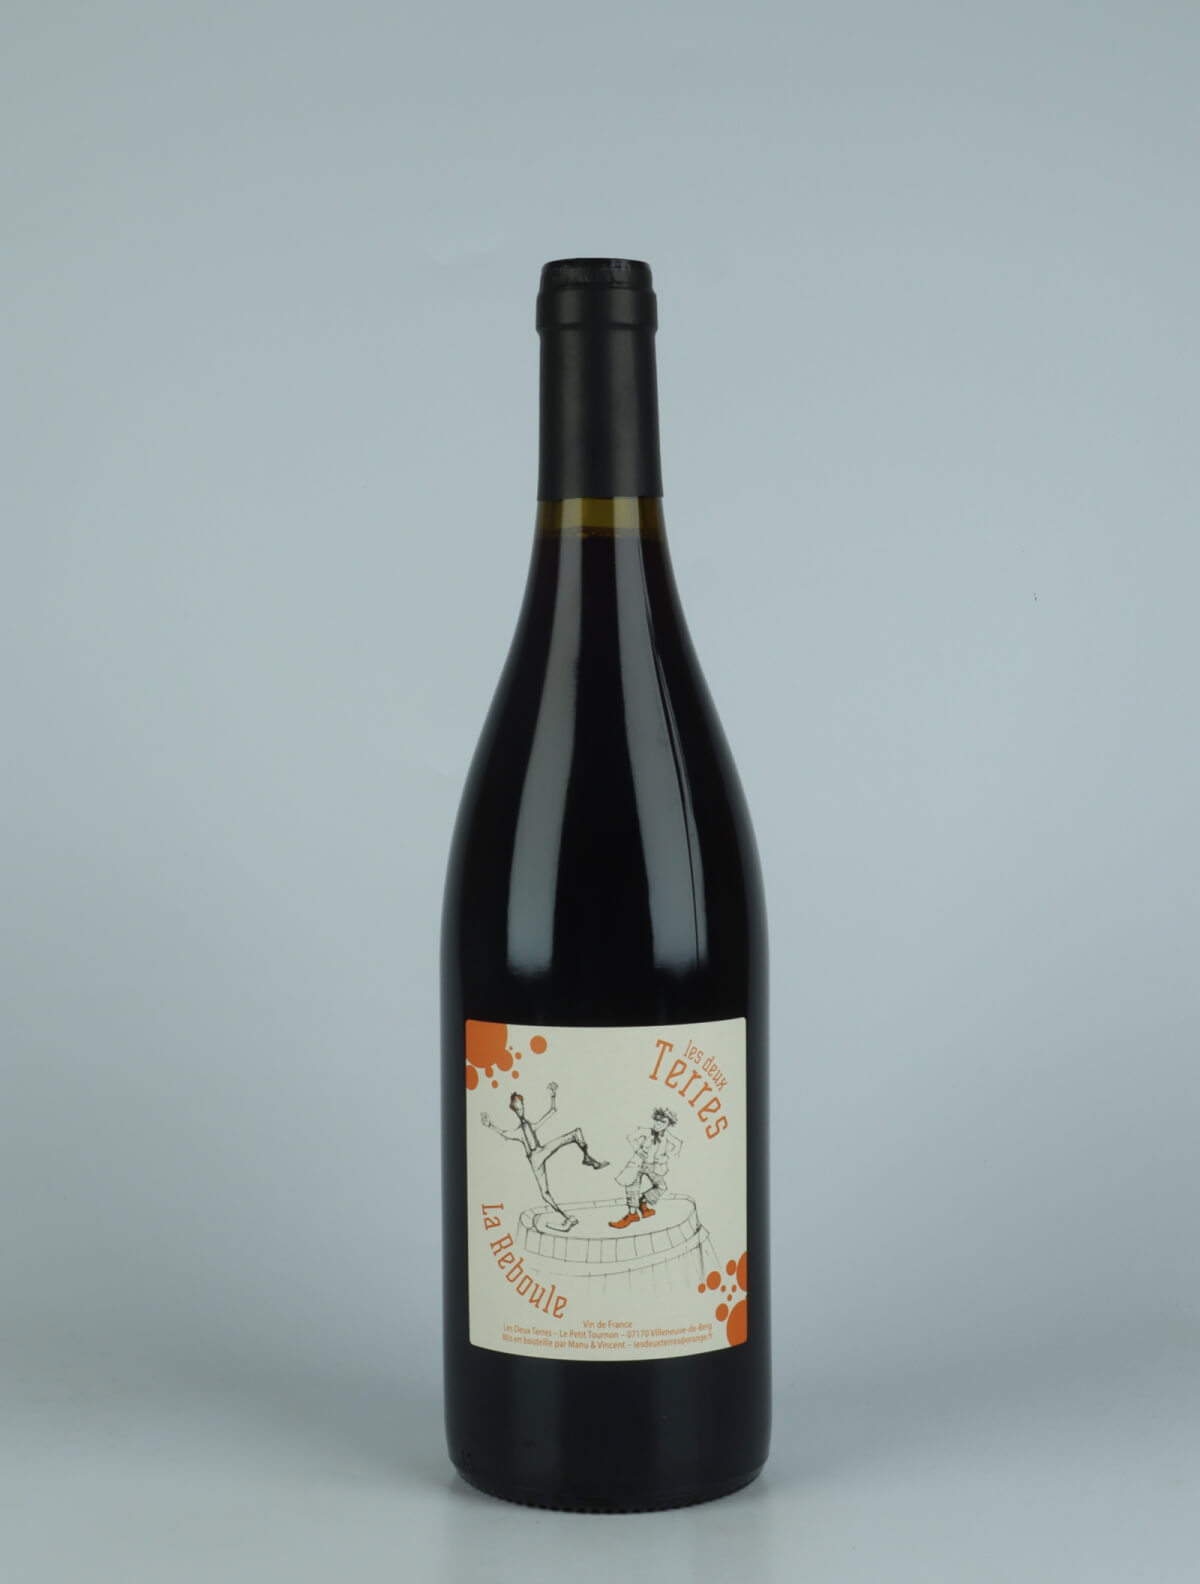 A bottle 2022 Reboule Red wine from Les Deux Terres, Ardèche in France